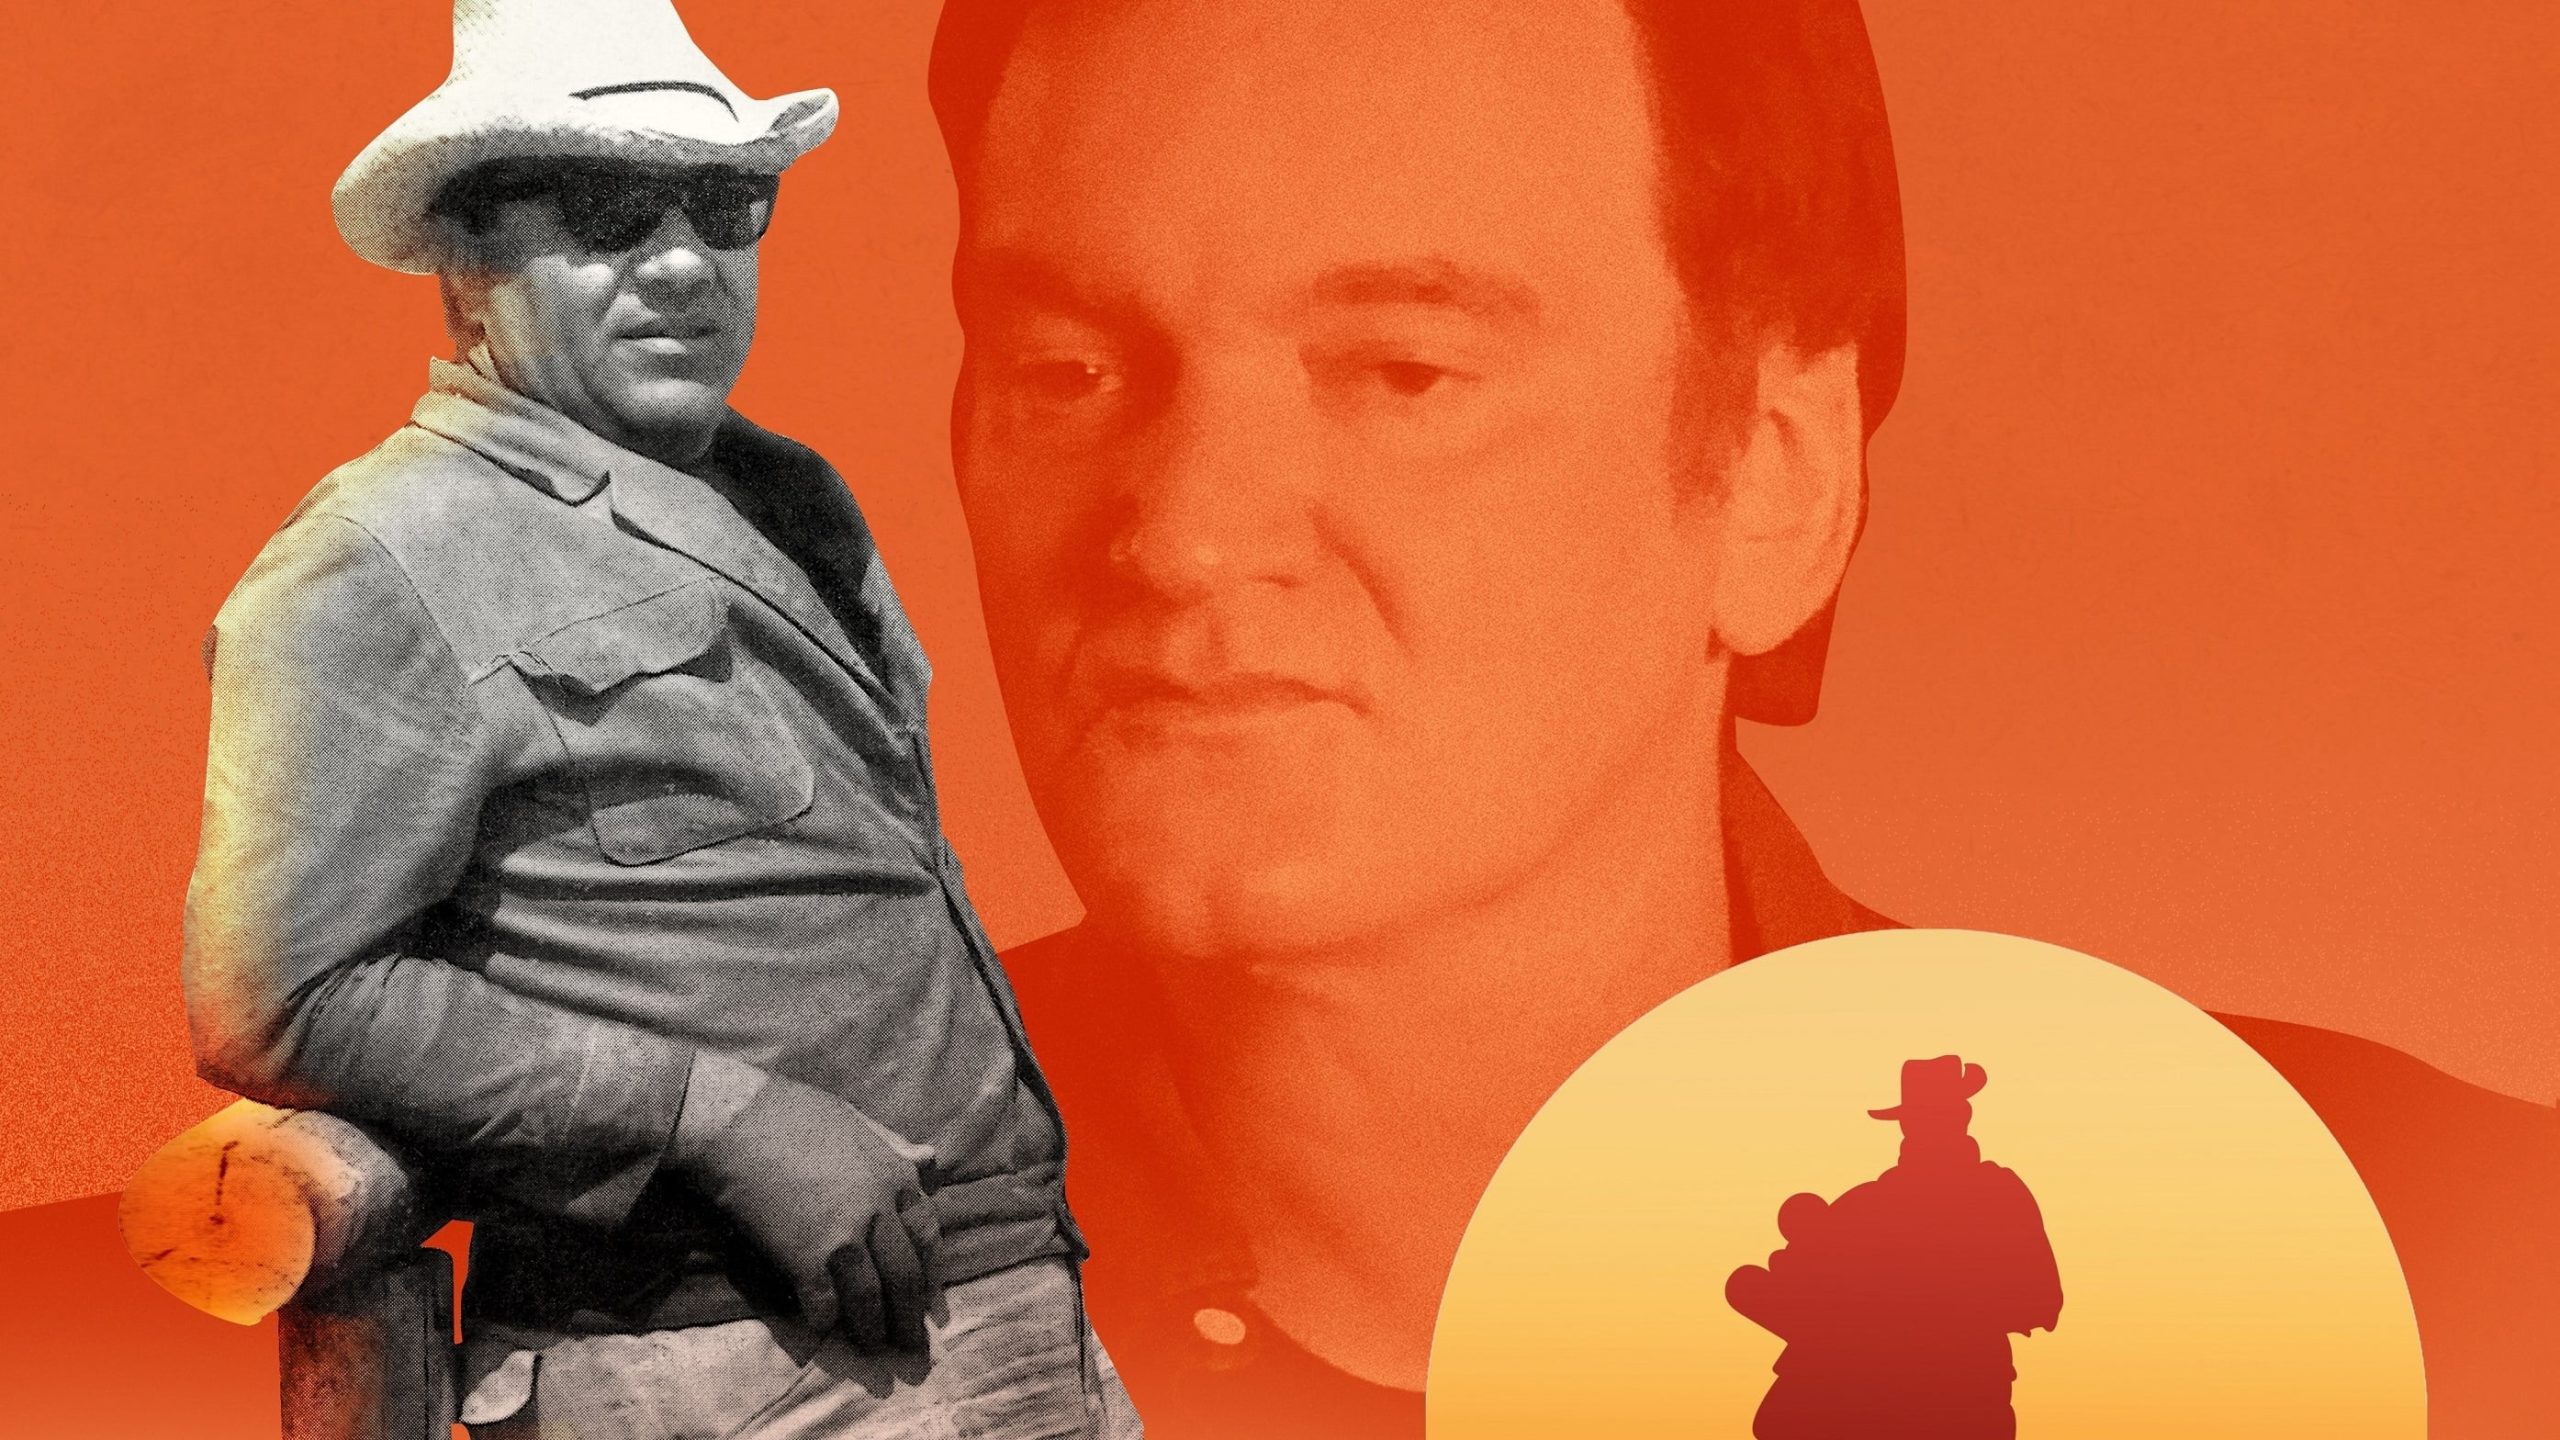 Western Quentin Tarantino Documentary Heading to Netflix